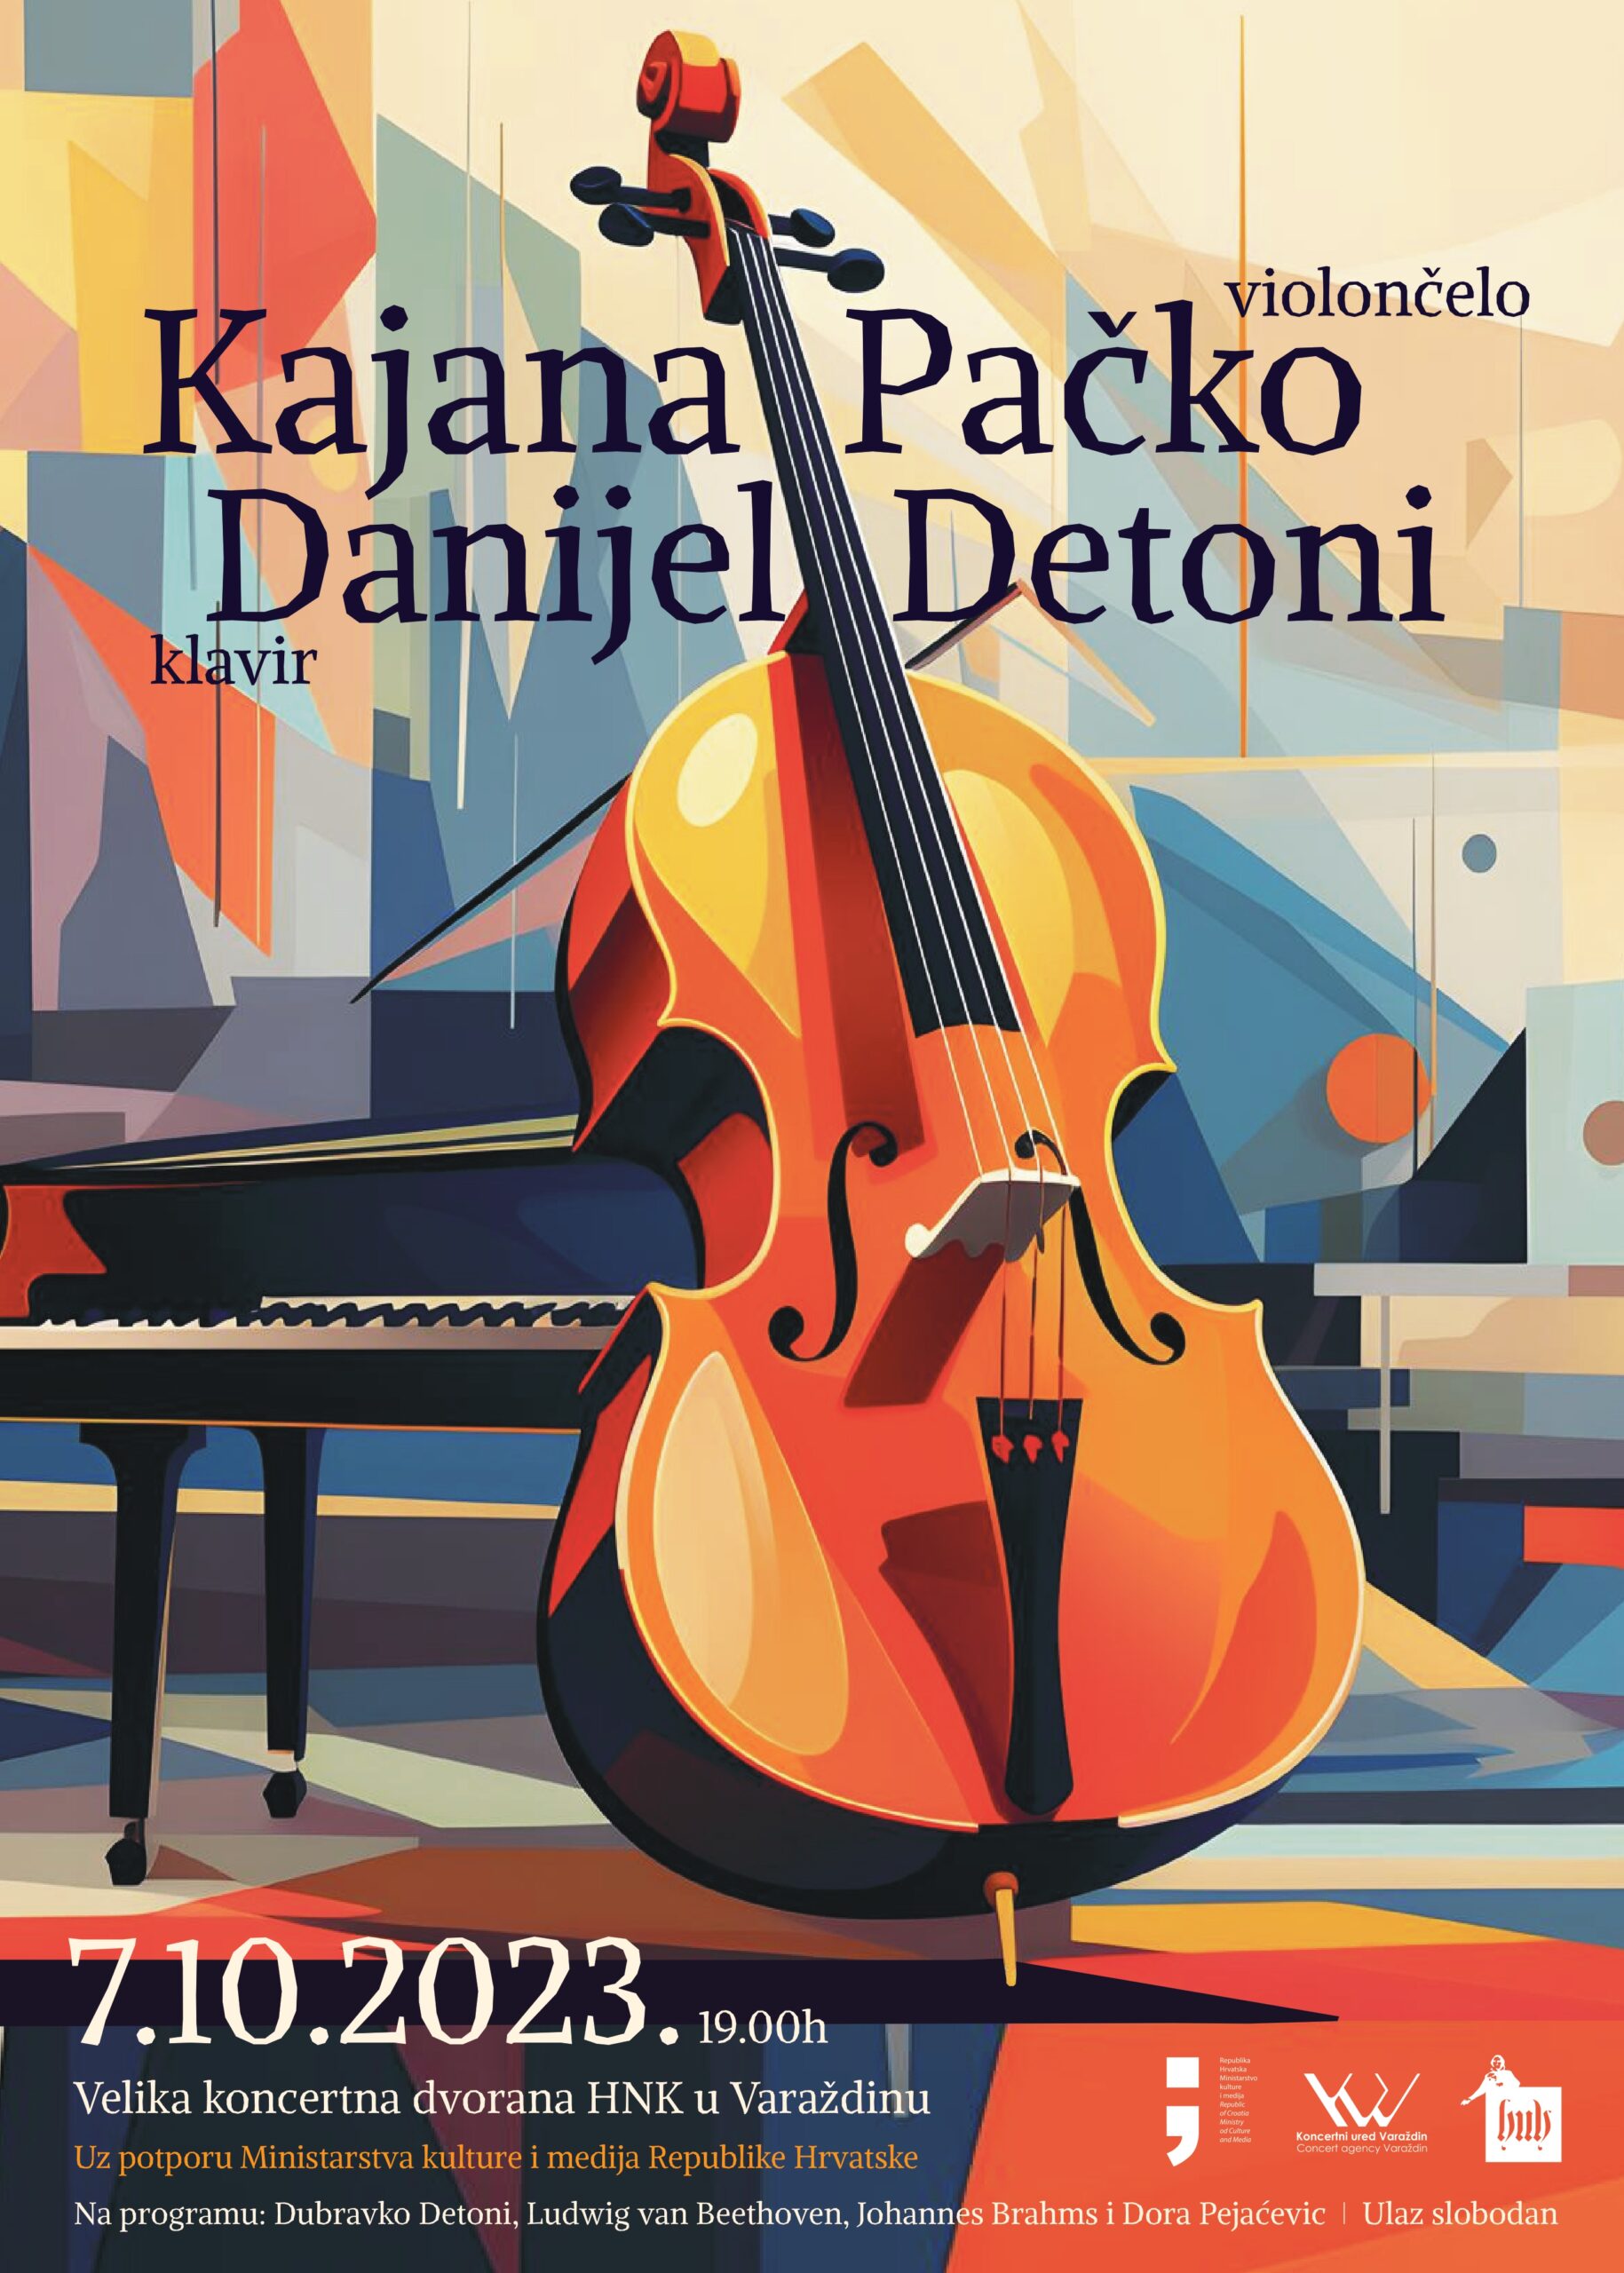 Kajana Pačko, violončelo & Danijel Detoni, klavirthumbnail - 